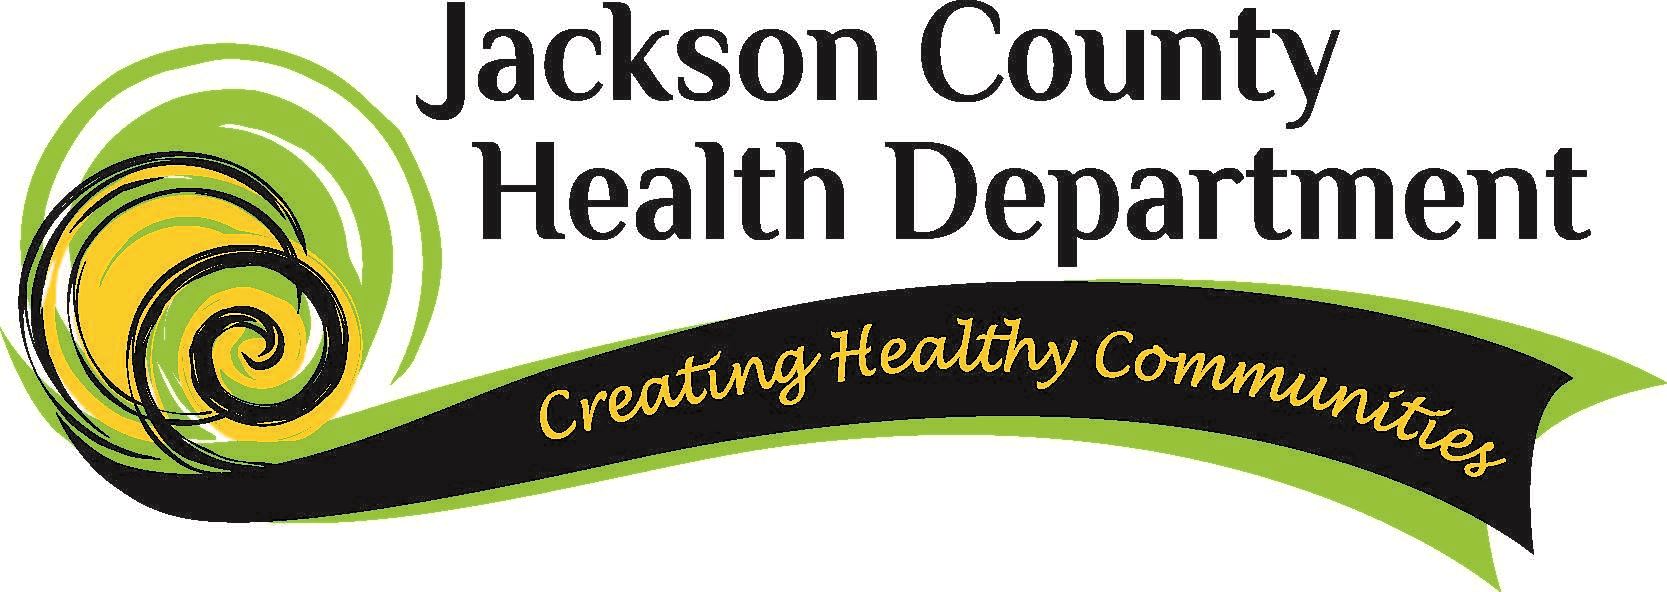 Jackson County Health Department Logo